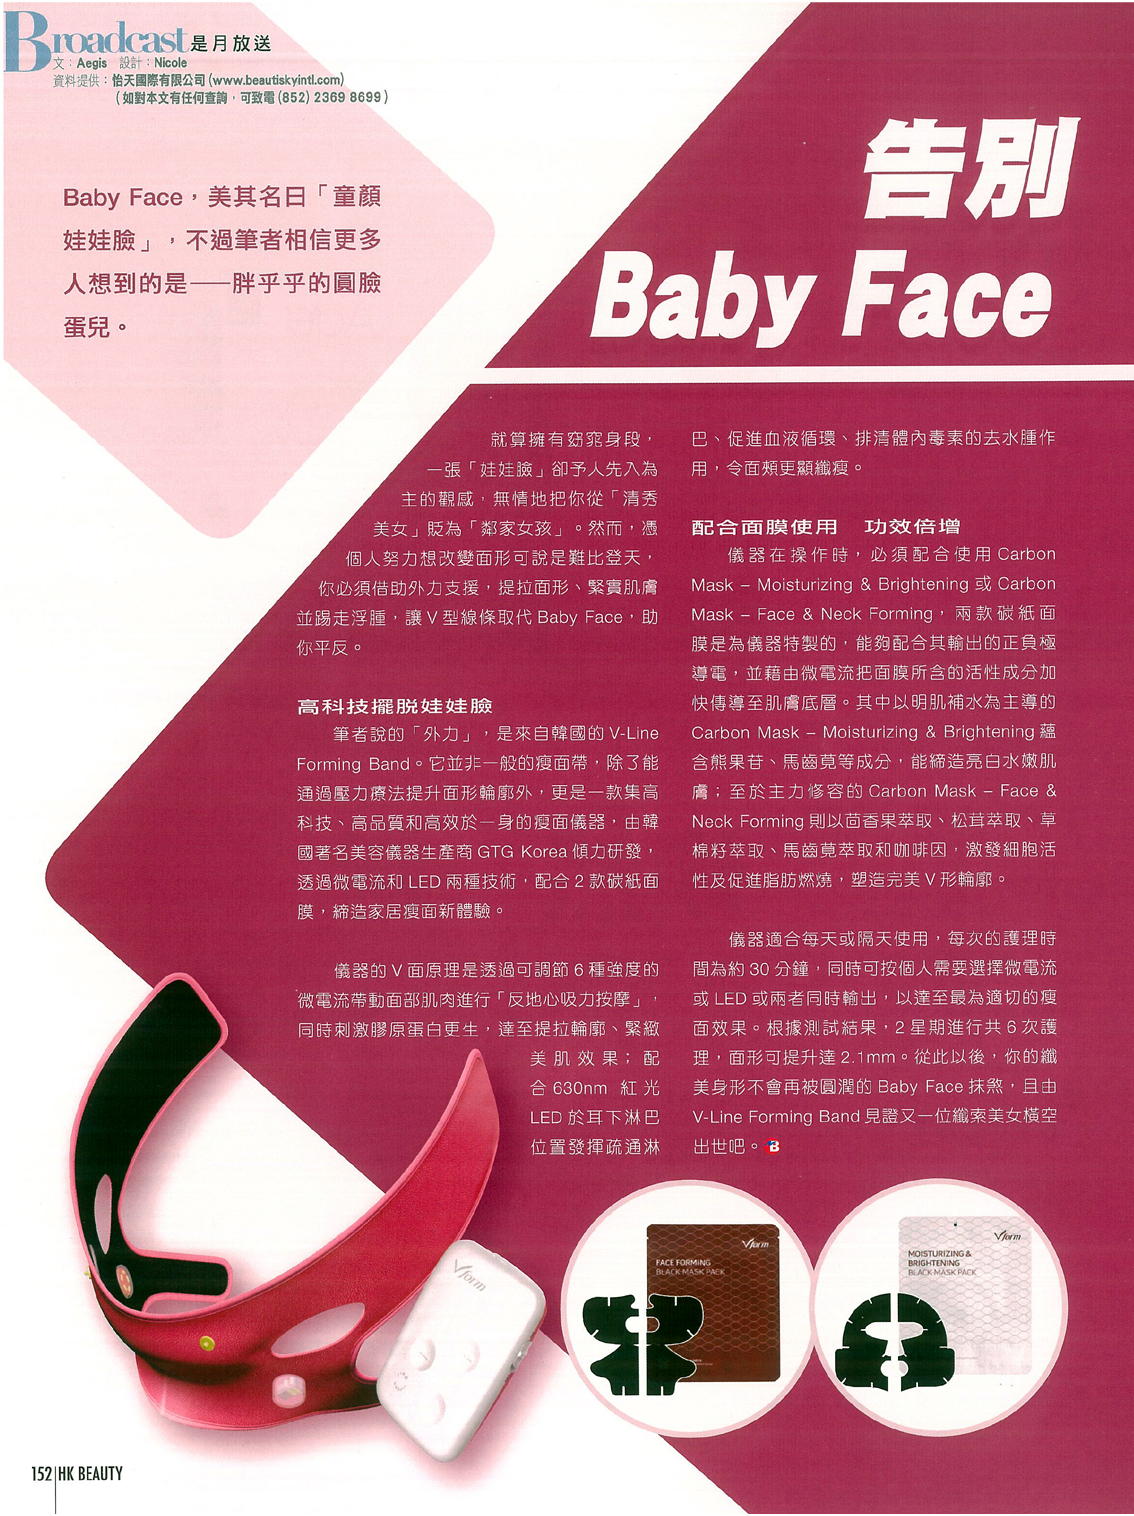 News0070_Baby_Face1.jpg